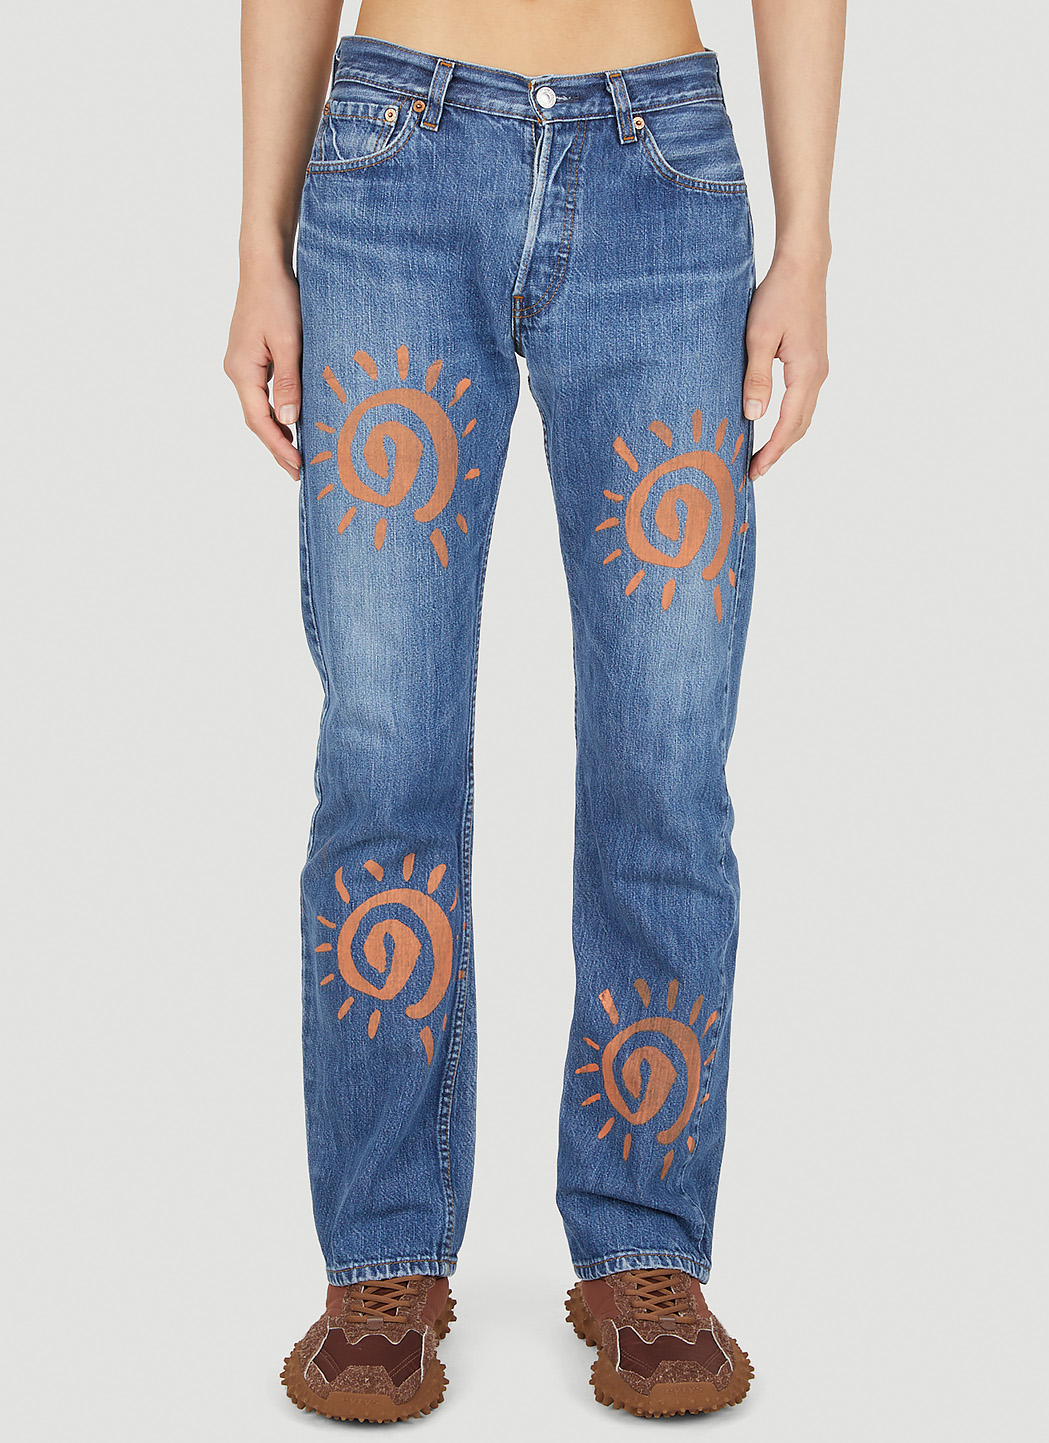 Energy Sun Second Life Jeans